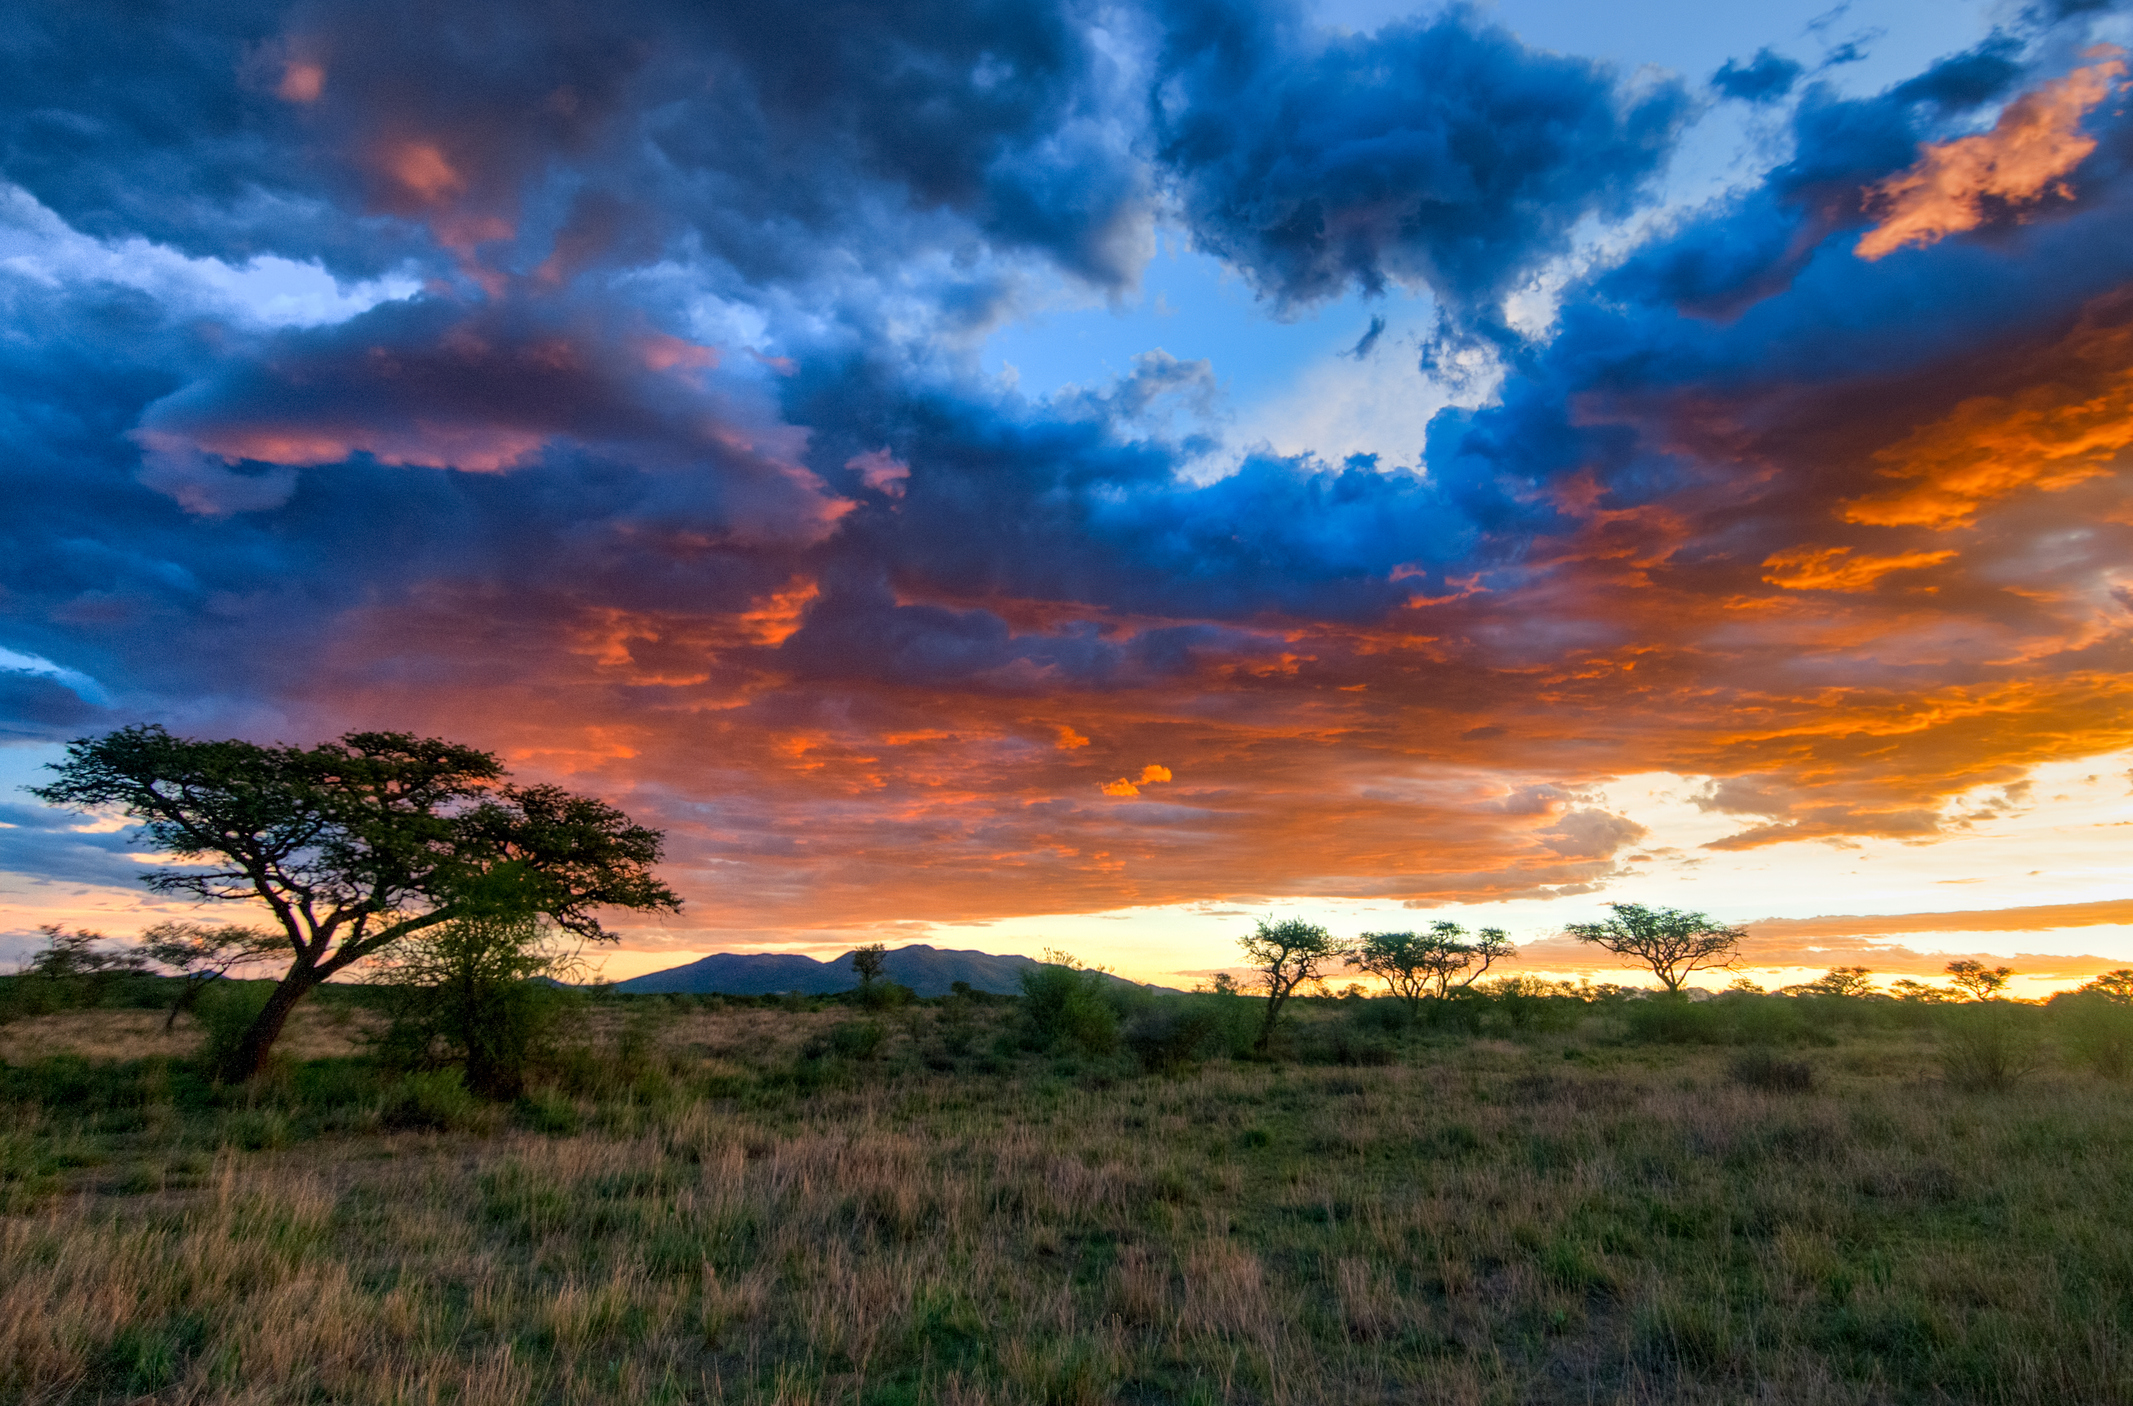 Sunset near Windhoek, Africa